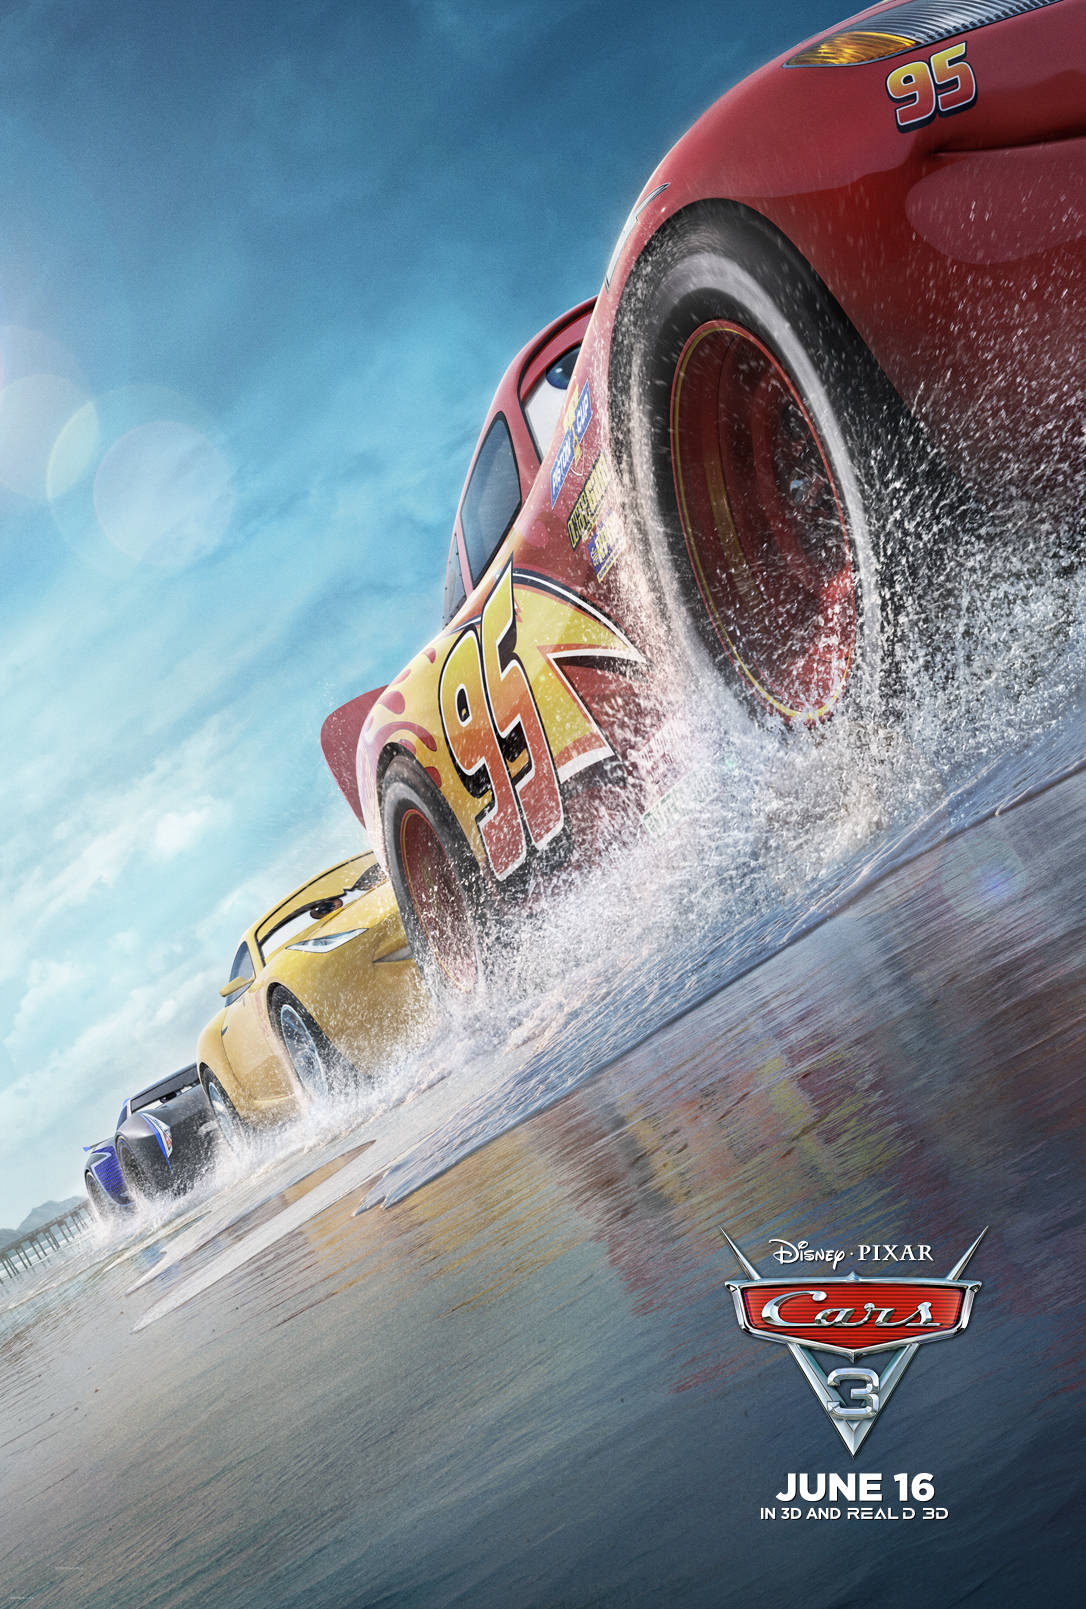 Cool Pixar Cars 3 Movie Poster Wallpaper